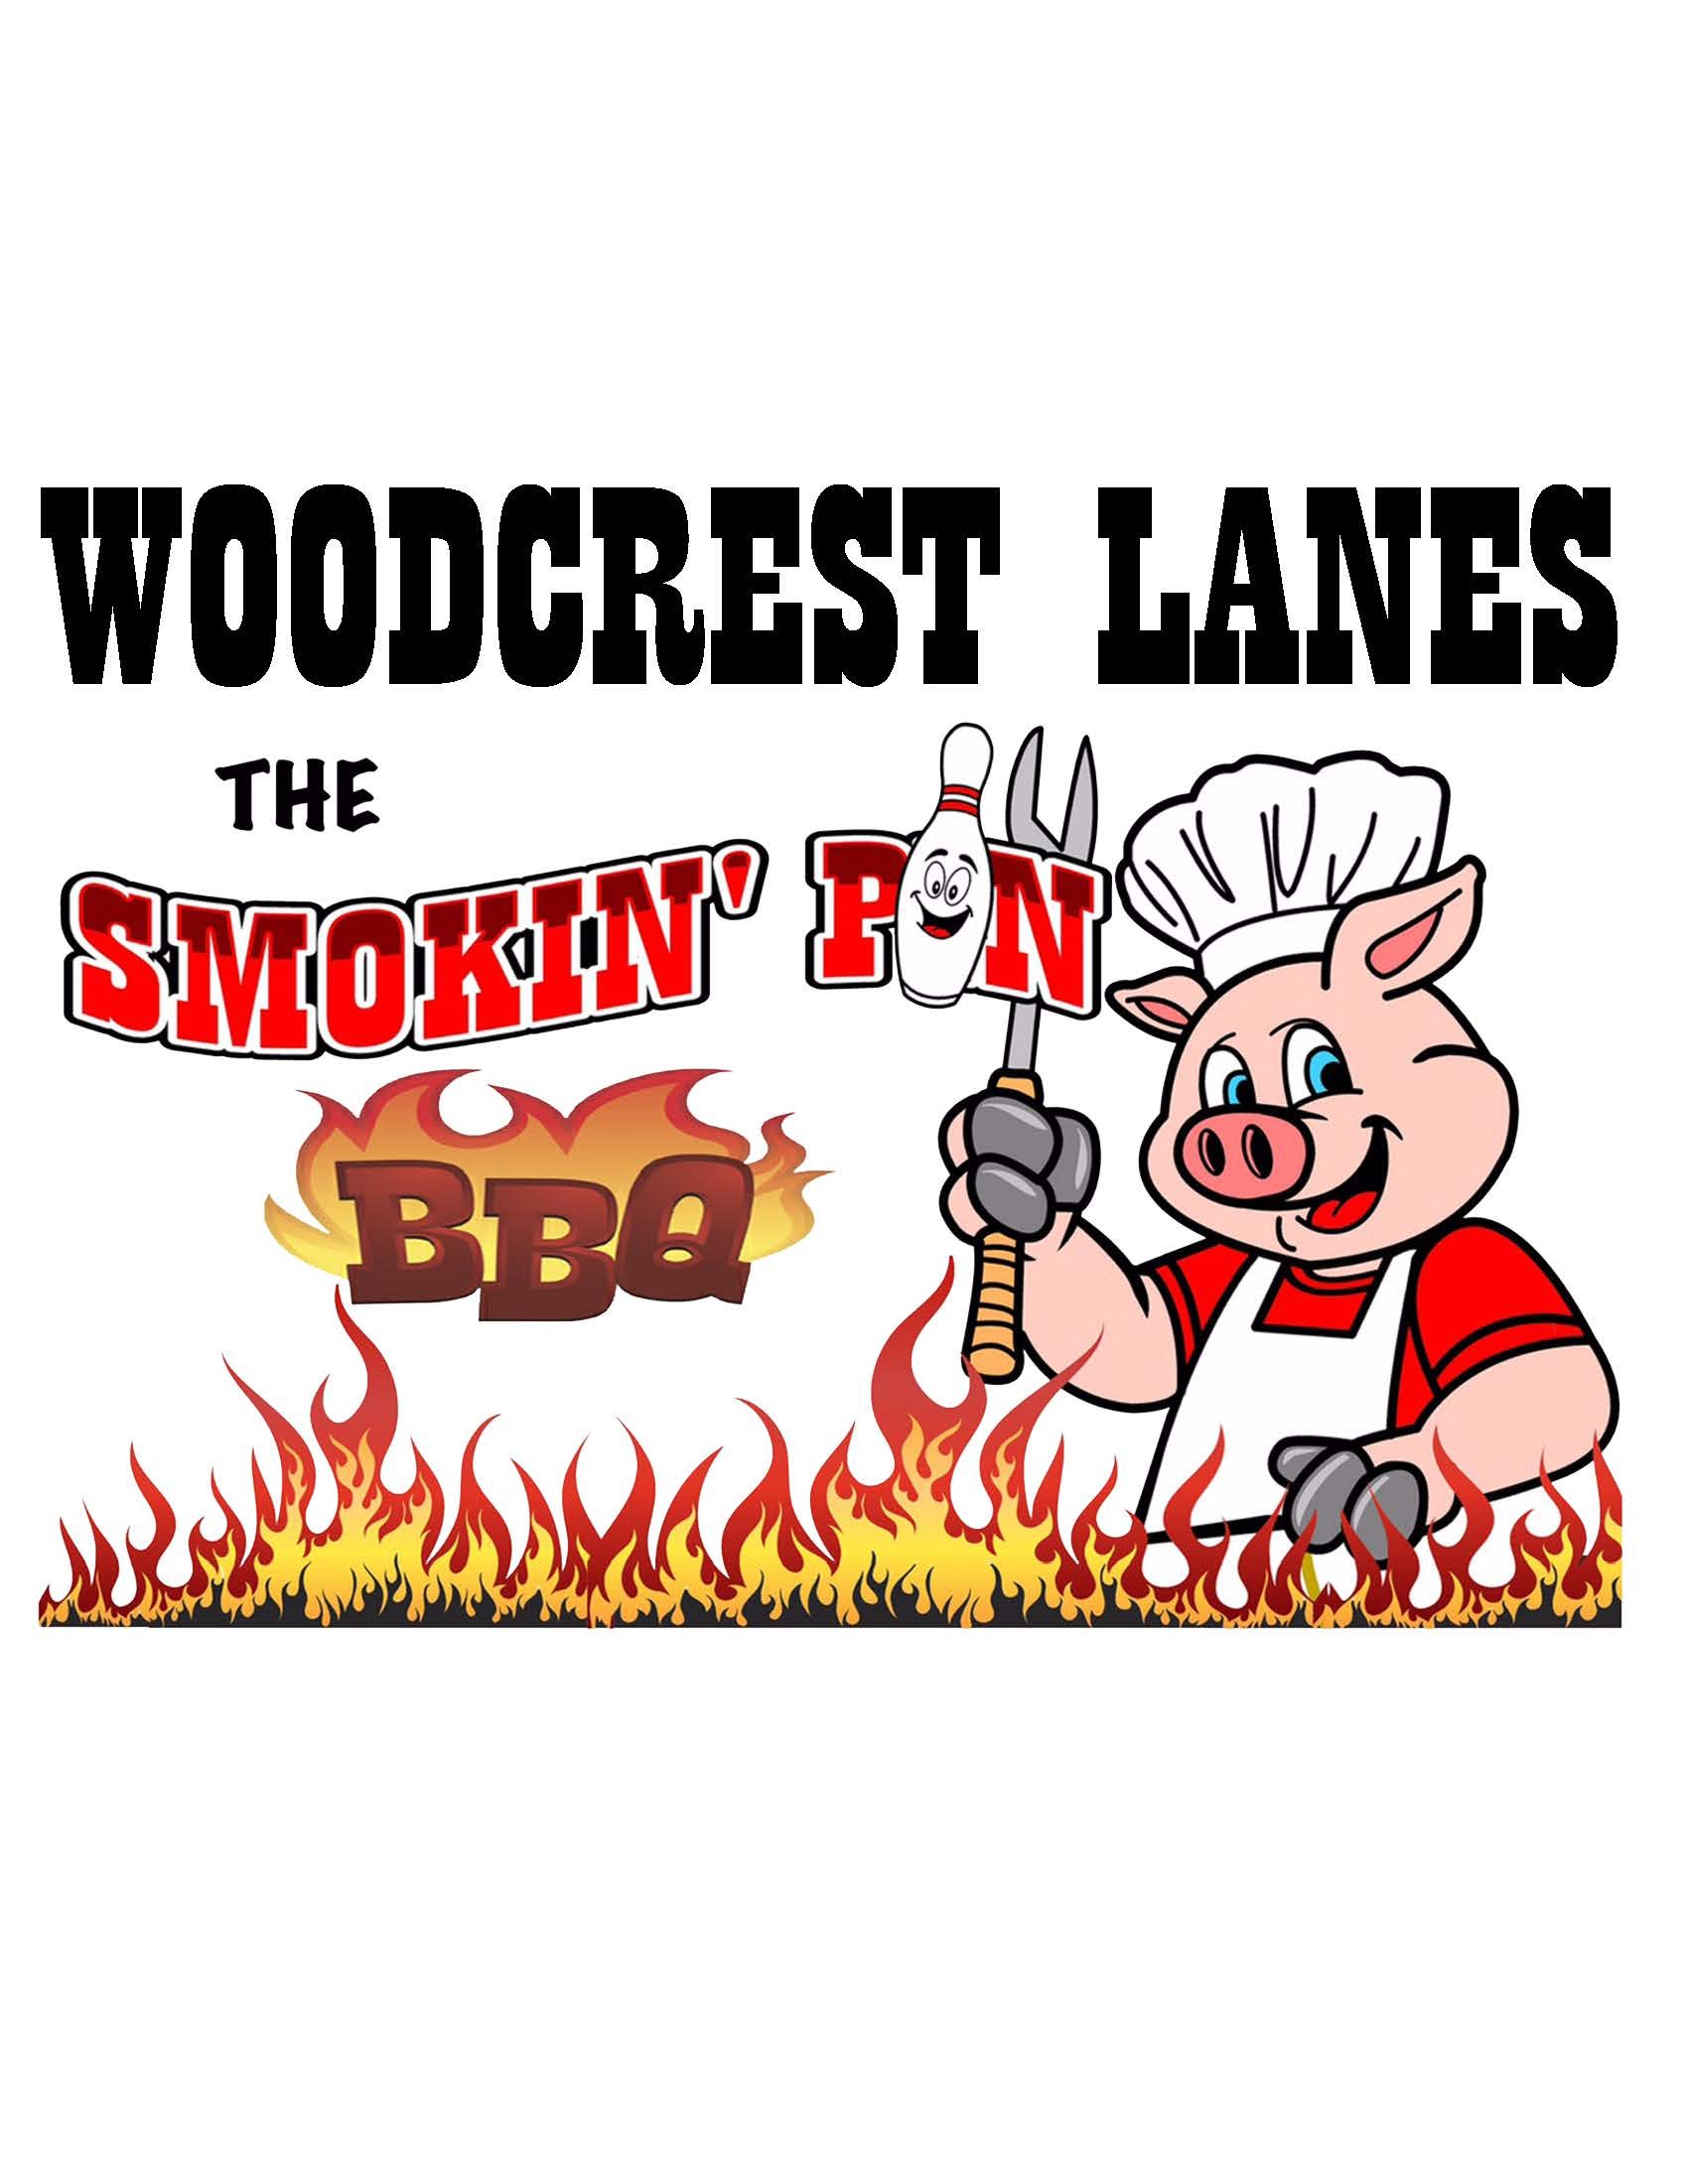 Woodcrest Lanes / The Smokin' Pin BBQ